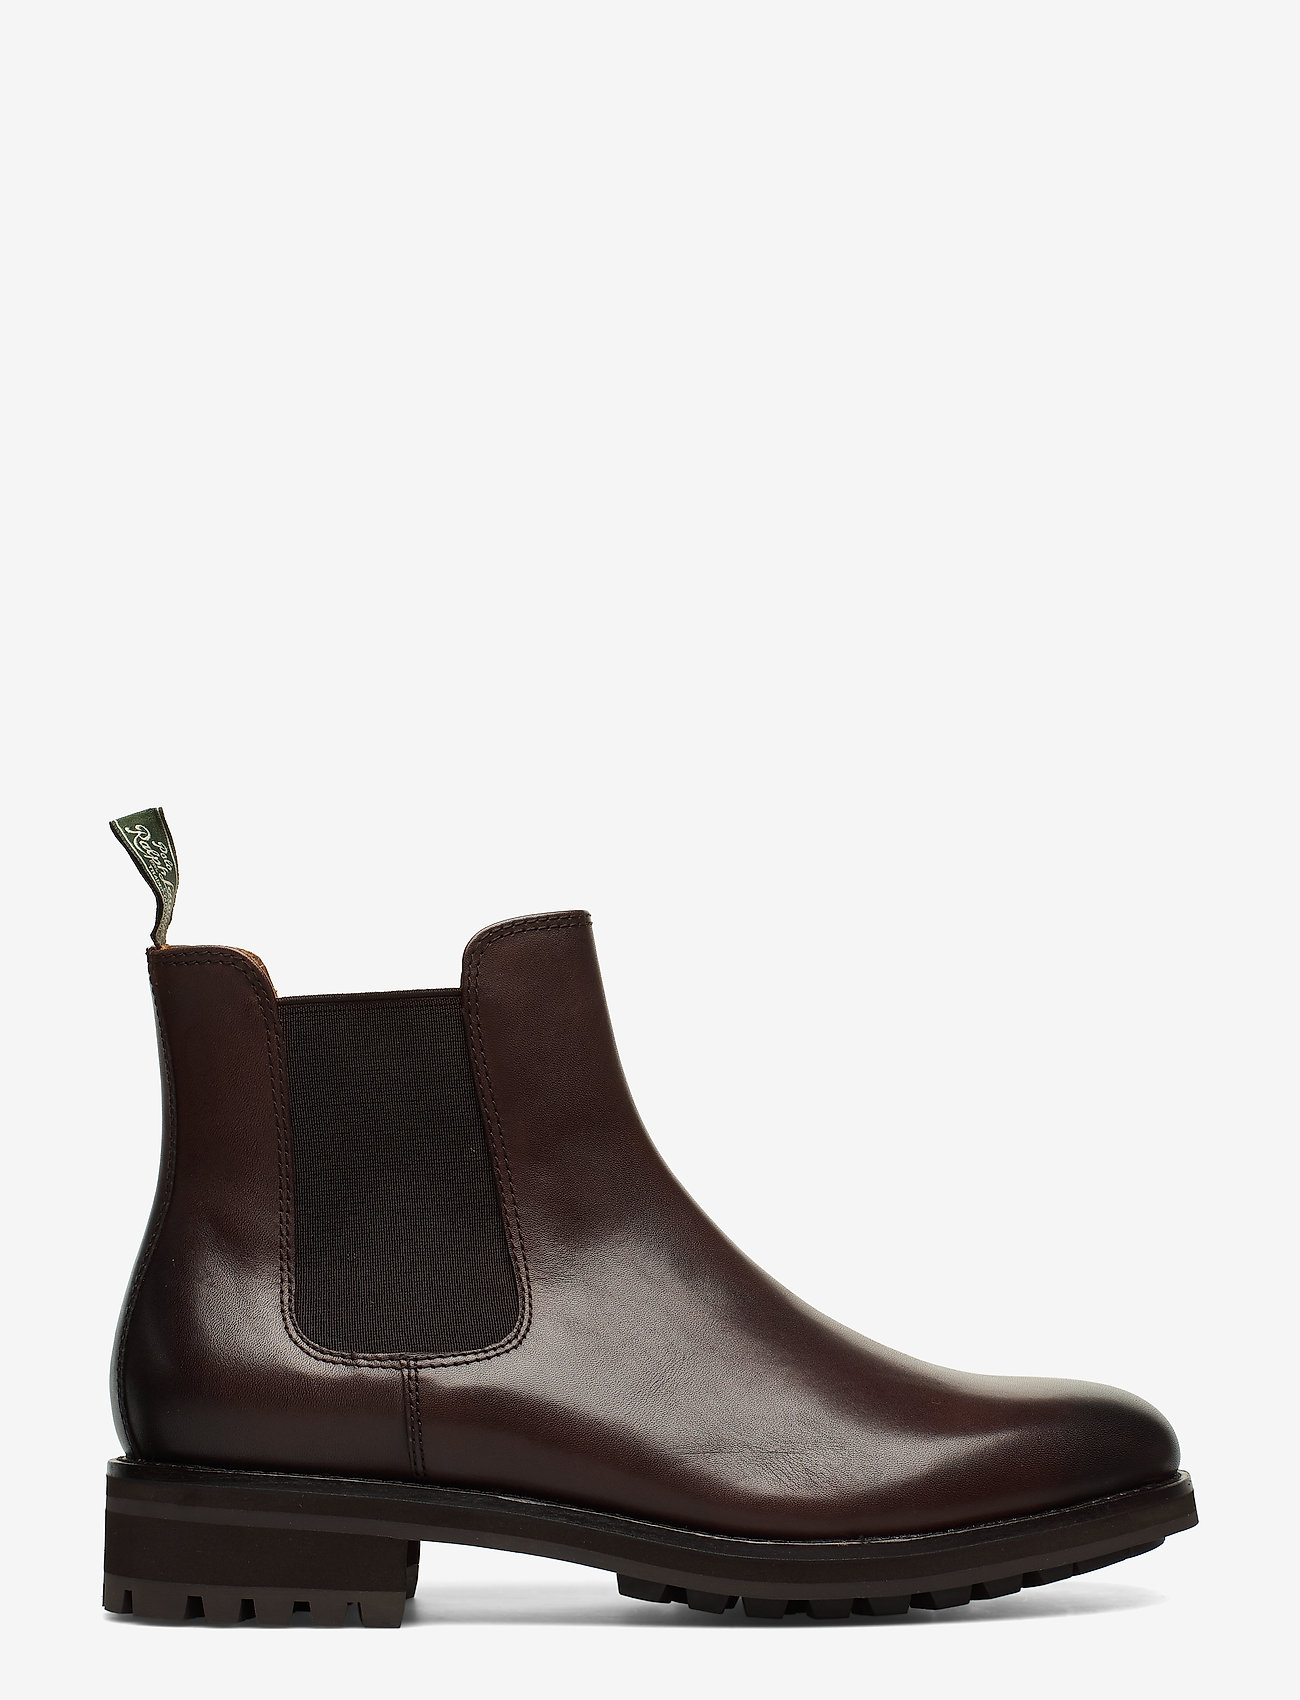 Polo Ralph Lauren - Bryson Leather Chelsea Boot - dzimšanas dienas dāvanas - polo brown - 1